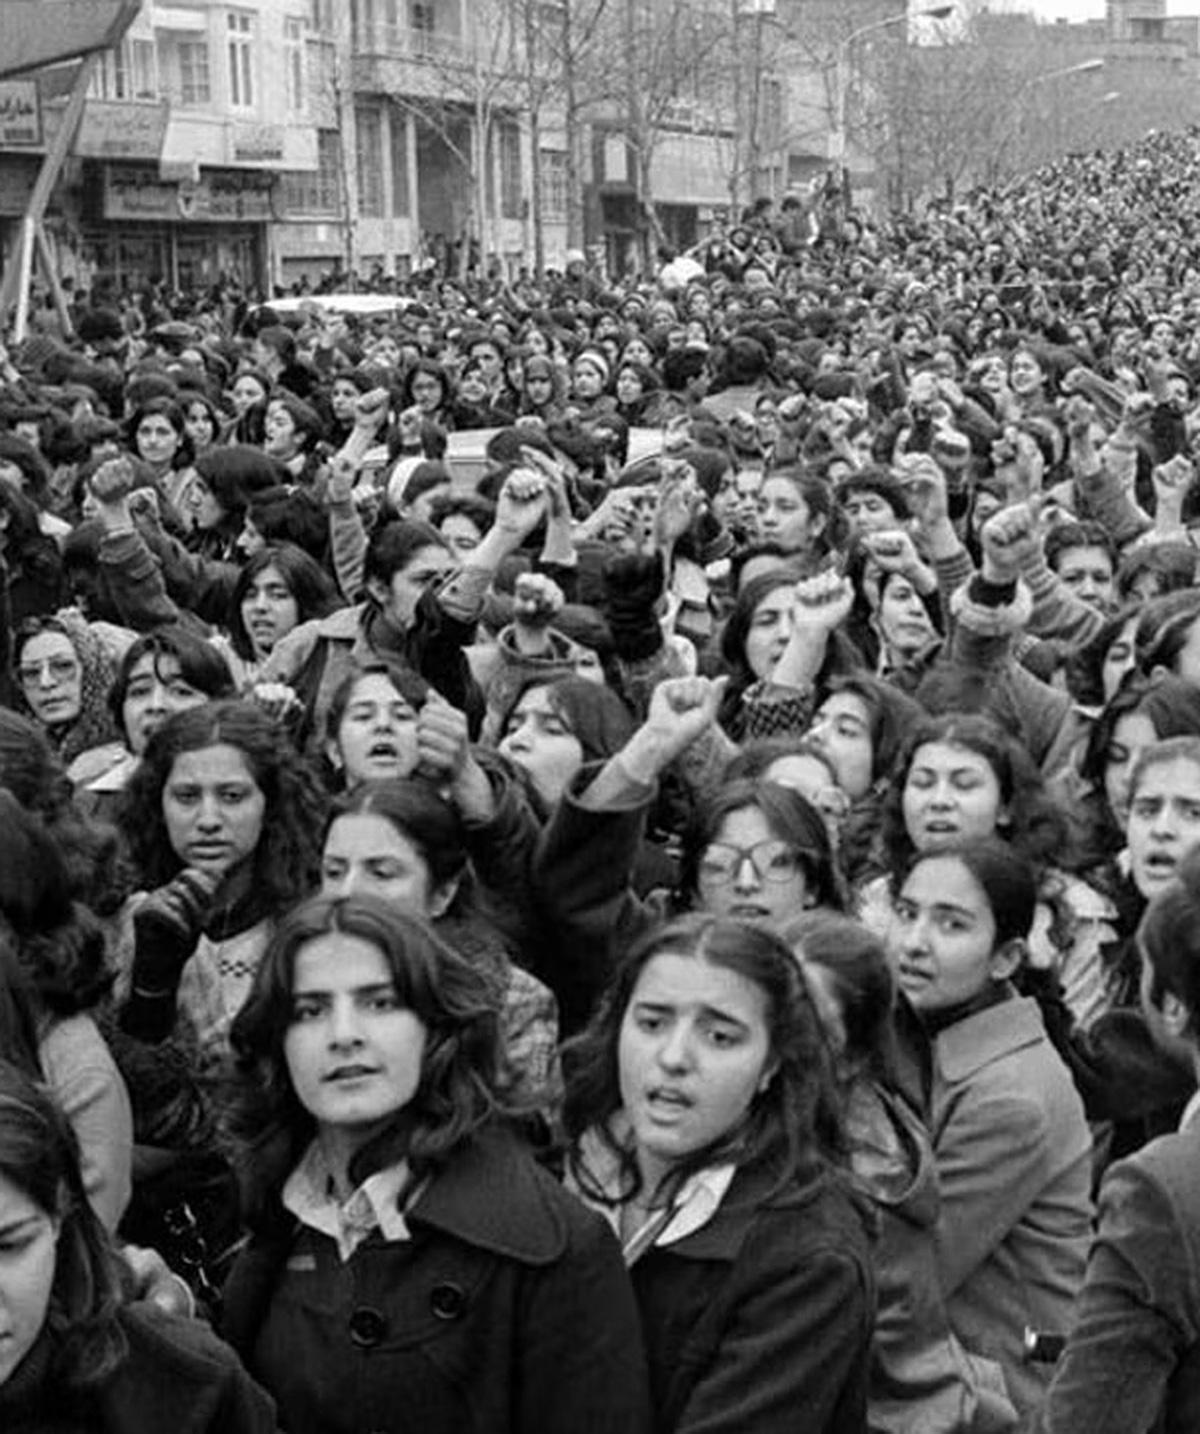 Iranian women in the streets on International Women's Day, 1979.